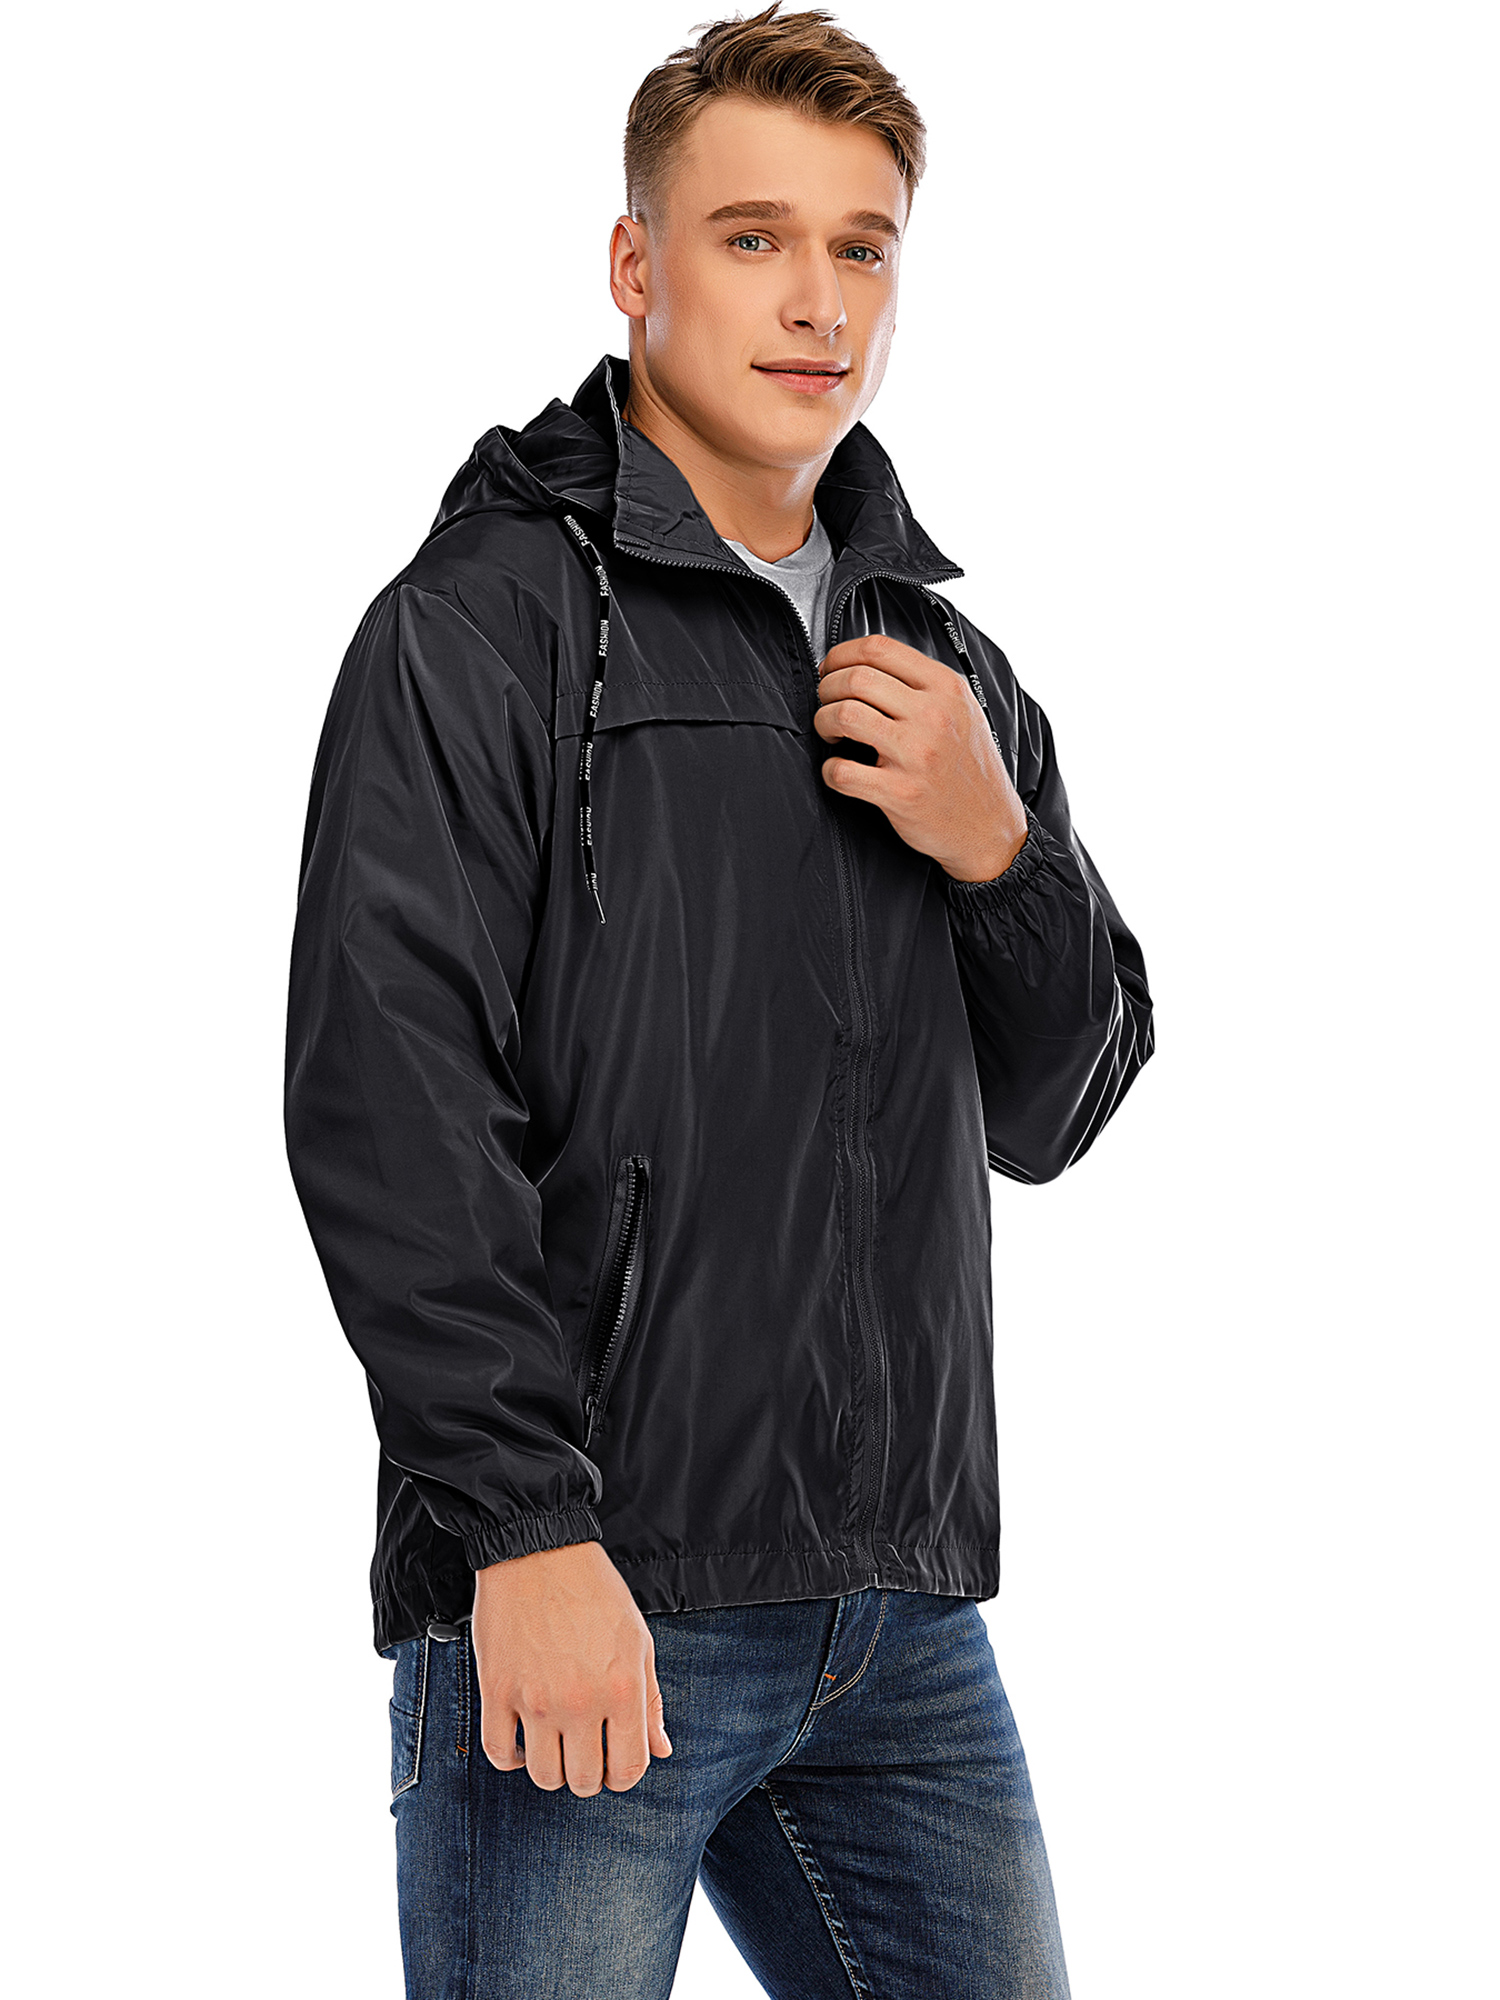 Men's Packable Rain Jacket Outdoor Waterproof Hooded Lightweight Classic Cycling Raincoat Comfortable Casual Windbreaker Rain Jacket - image 5 of 8